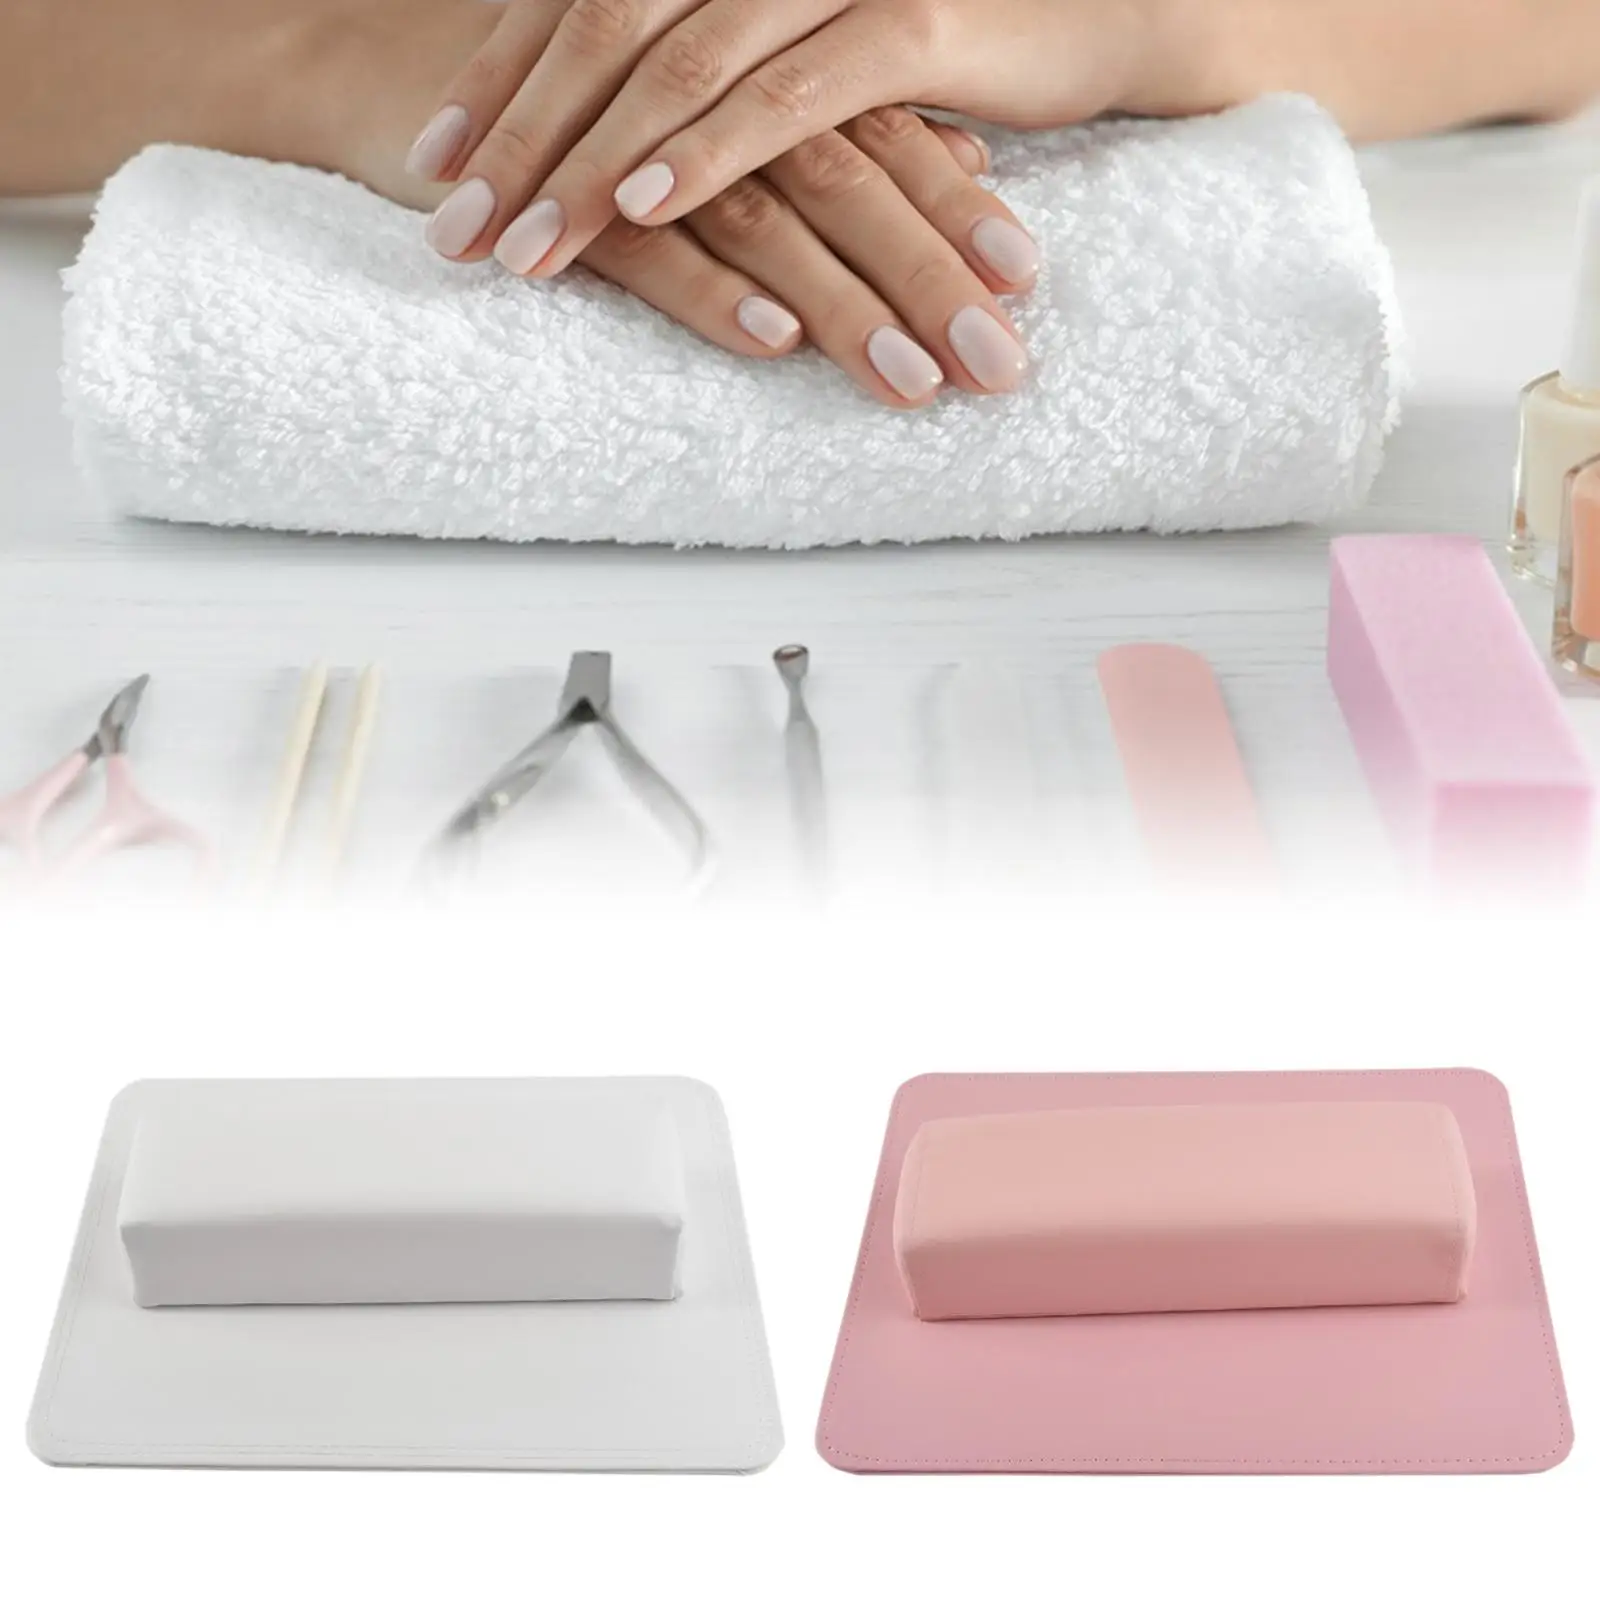 Nail Hand Pillow and Mat Set PU Leather Nail Art Cushion Mat Set Nail Arm Rest Holder Hand Cushion for Salon Home Manicurist